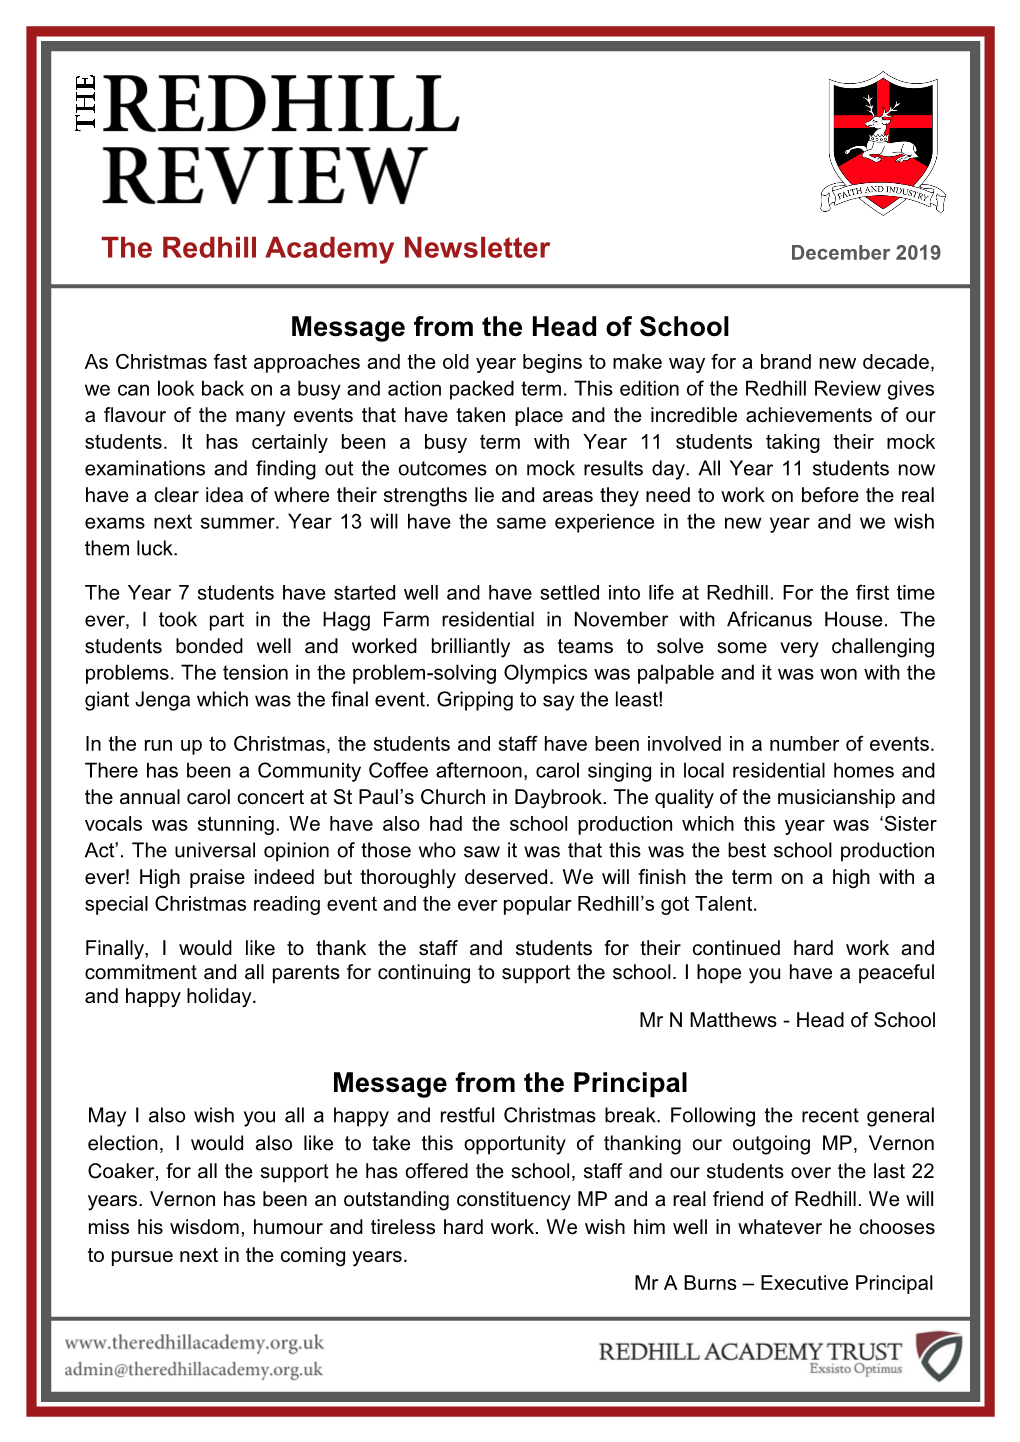 The Redhill Academy Newsletter December 2019